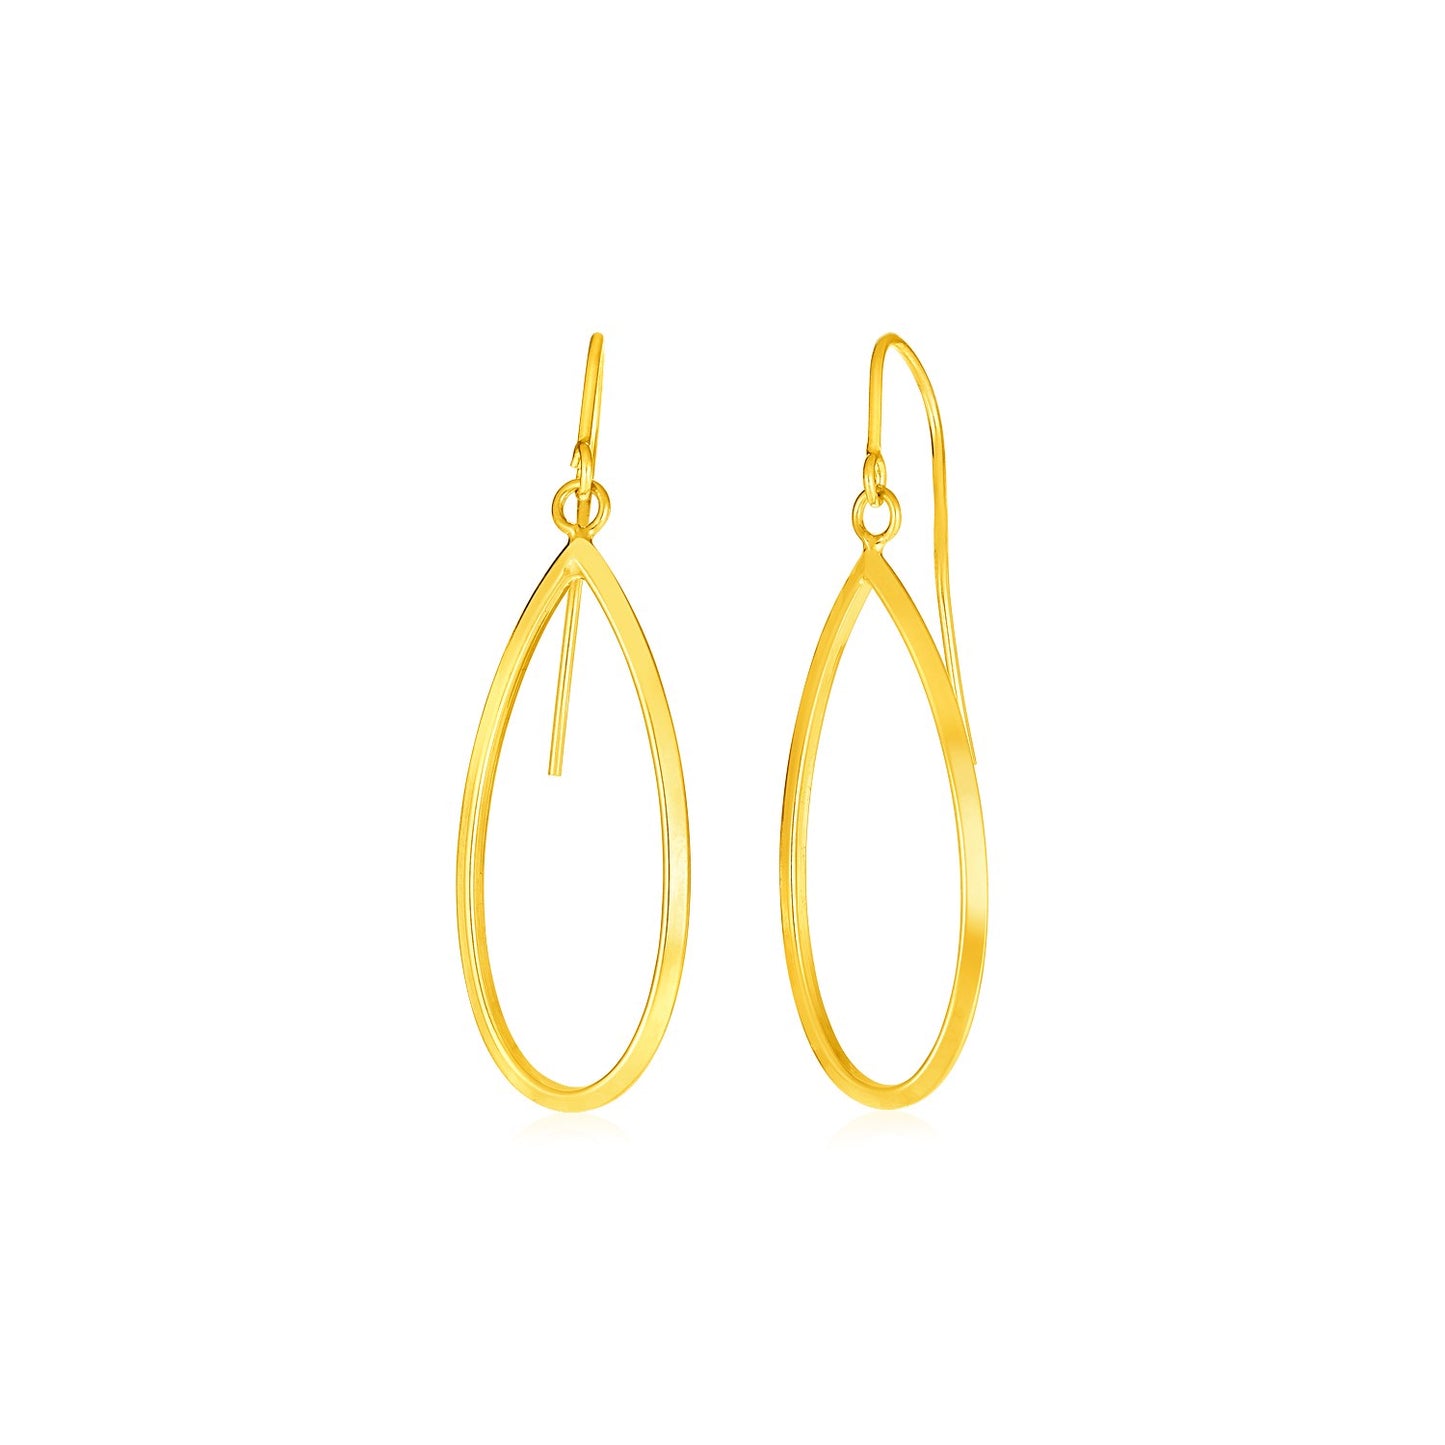 14k Yellow Gold Earrings with Polished Open Teardrop Dangles